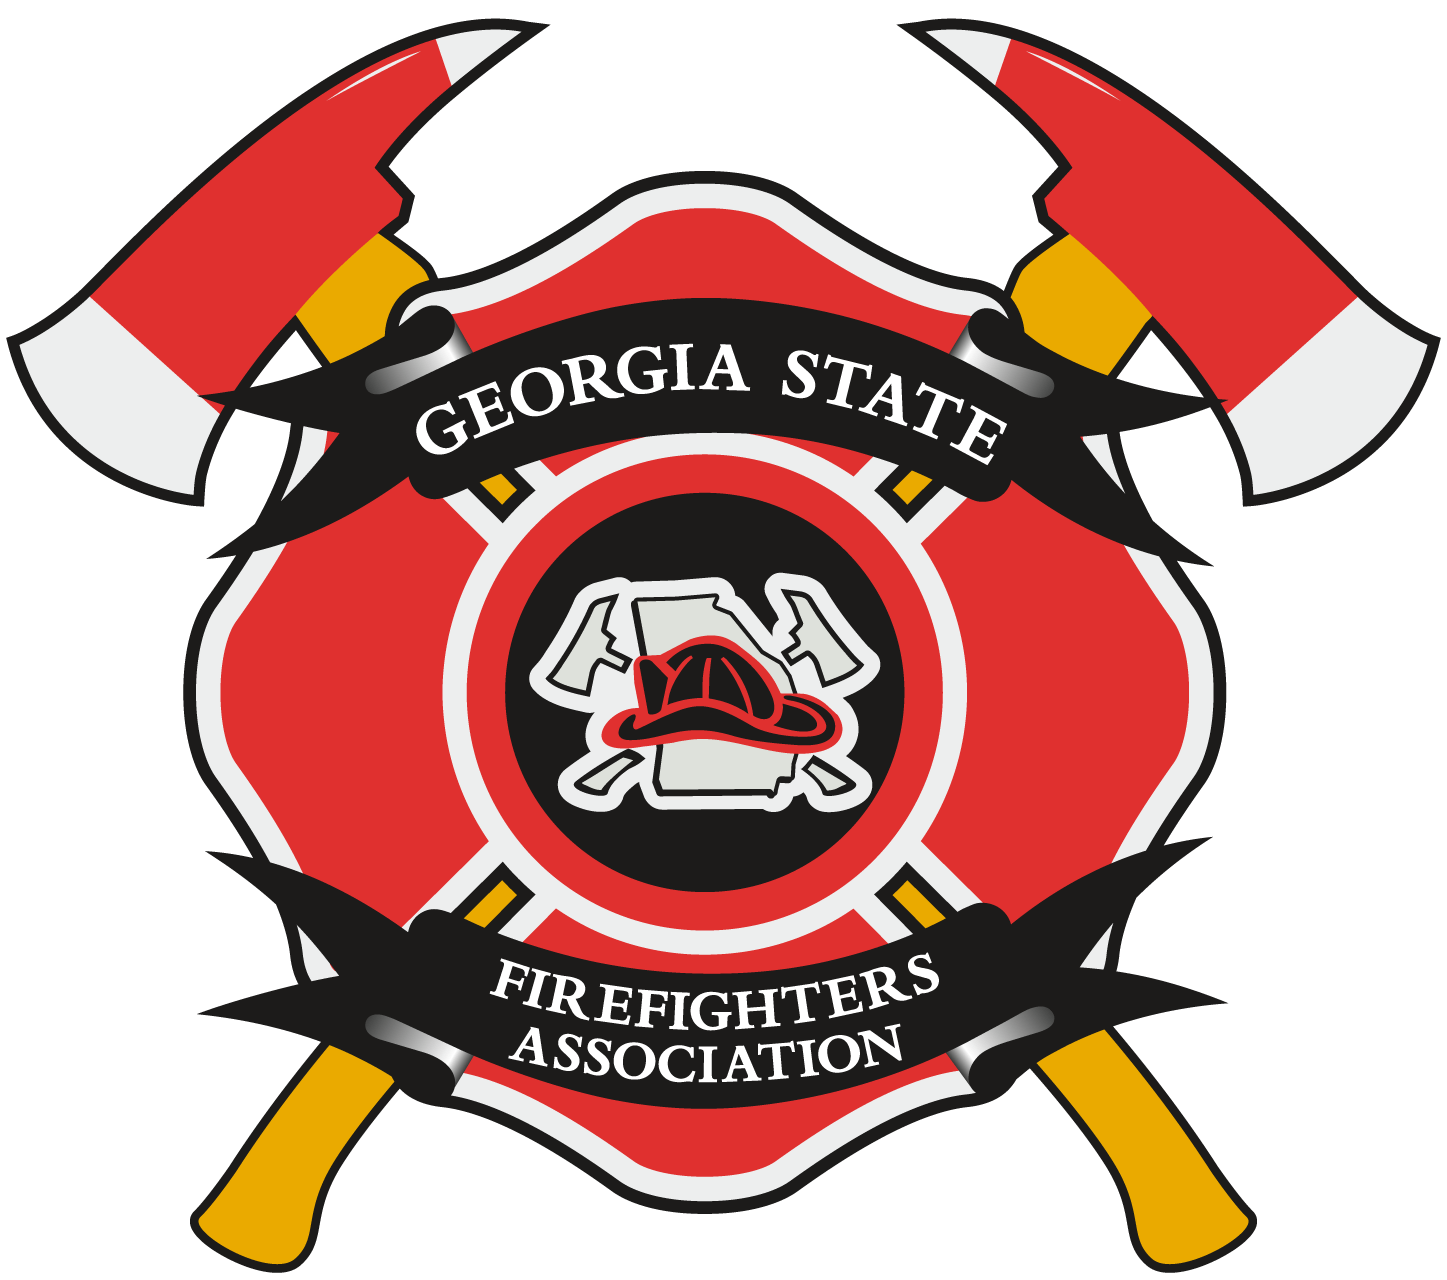 The Georgia State Firefighters Association (GSFA)